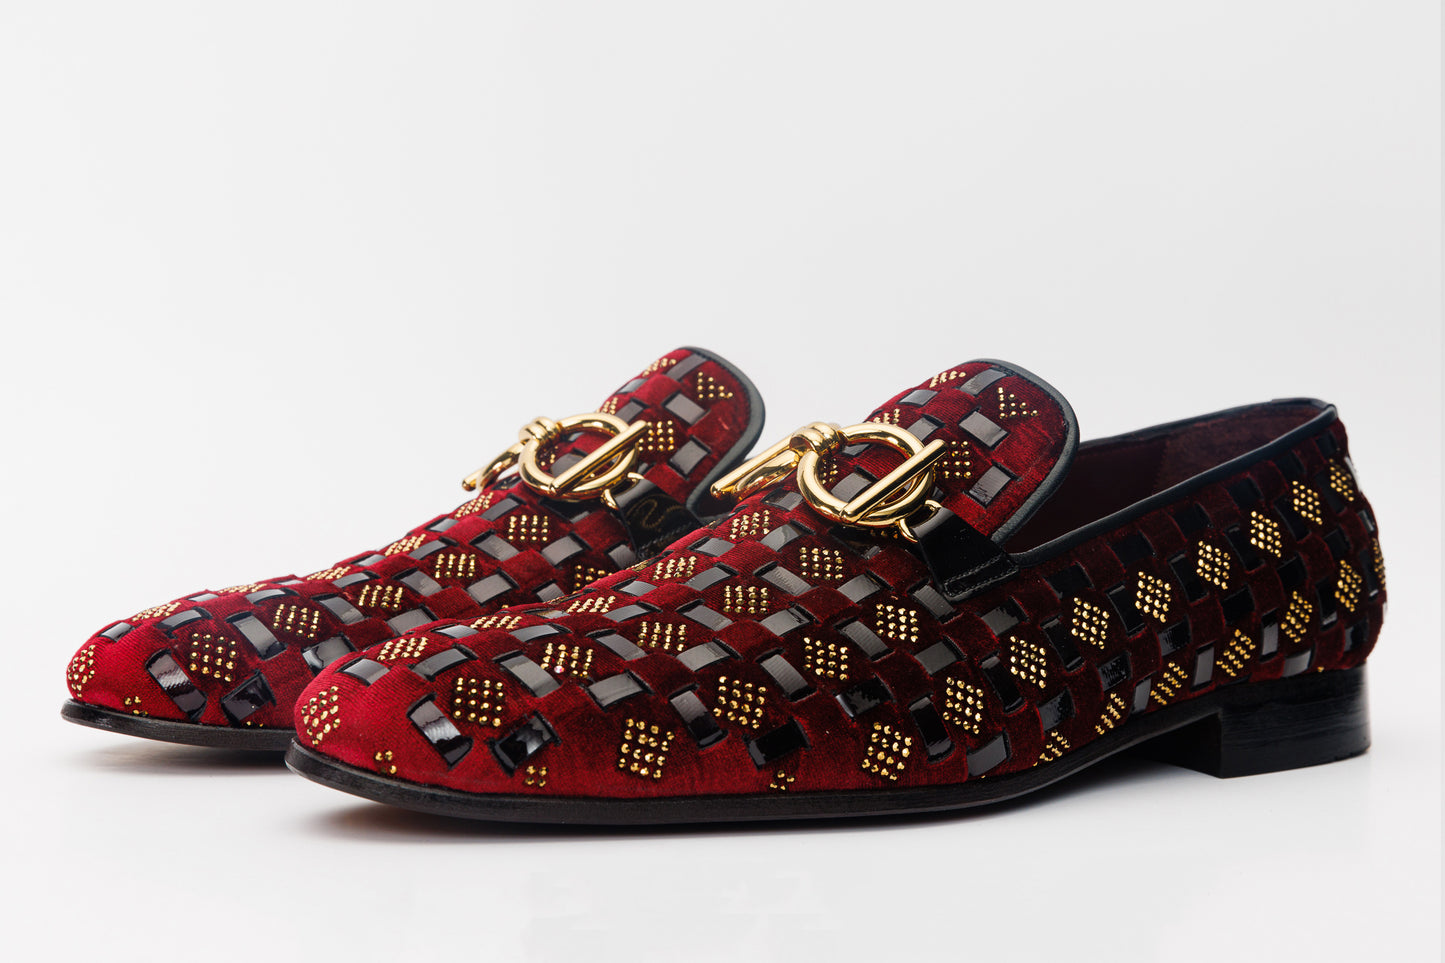 The Vicino Shoe Burgundy Bit Dress Loafer Limited Edition Men Shoe